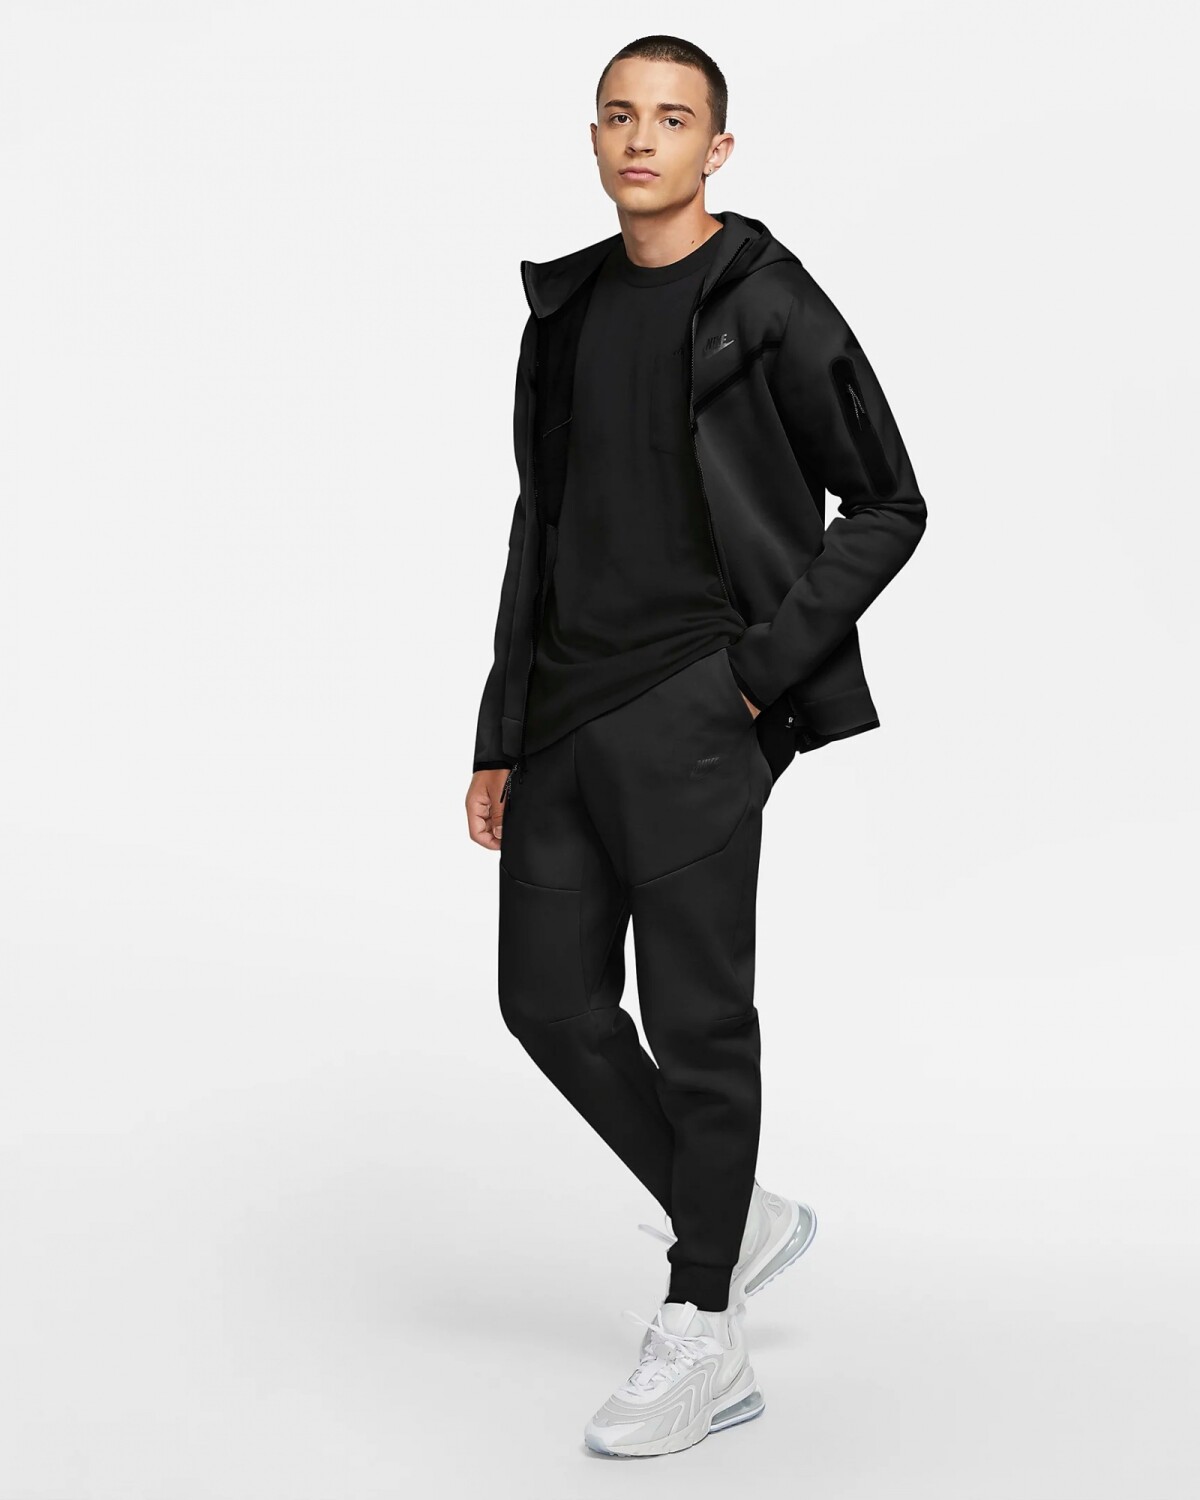 Pantalon Nike Moda Hombre Tech Fleece - S/C — Menpi